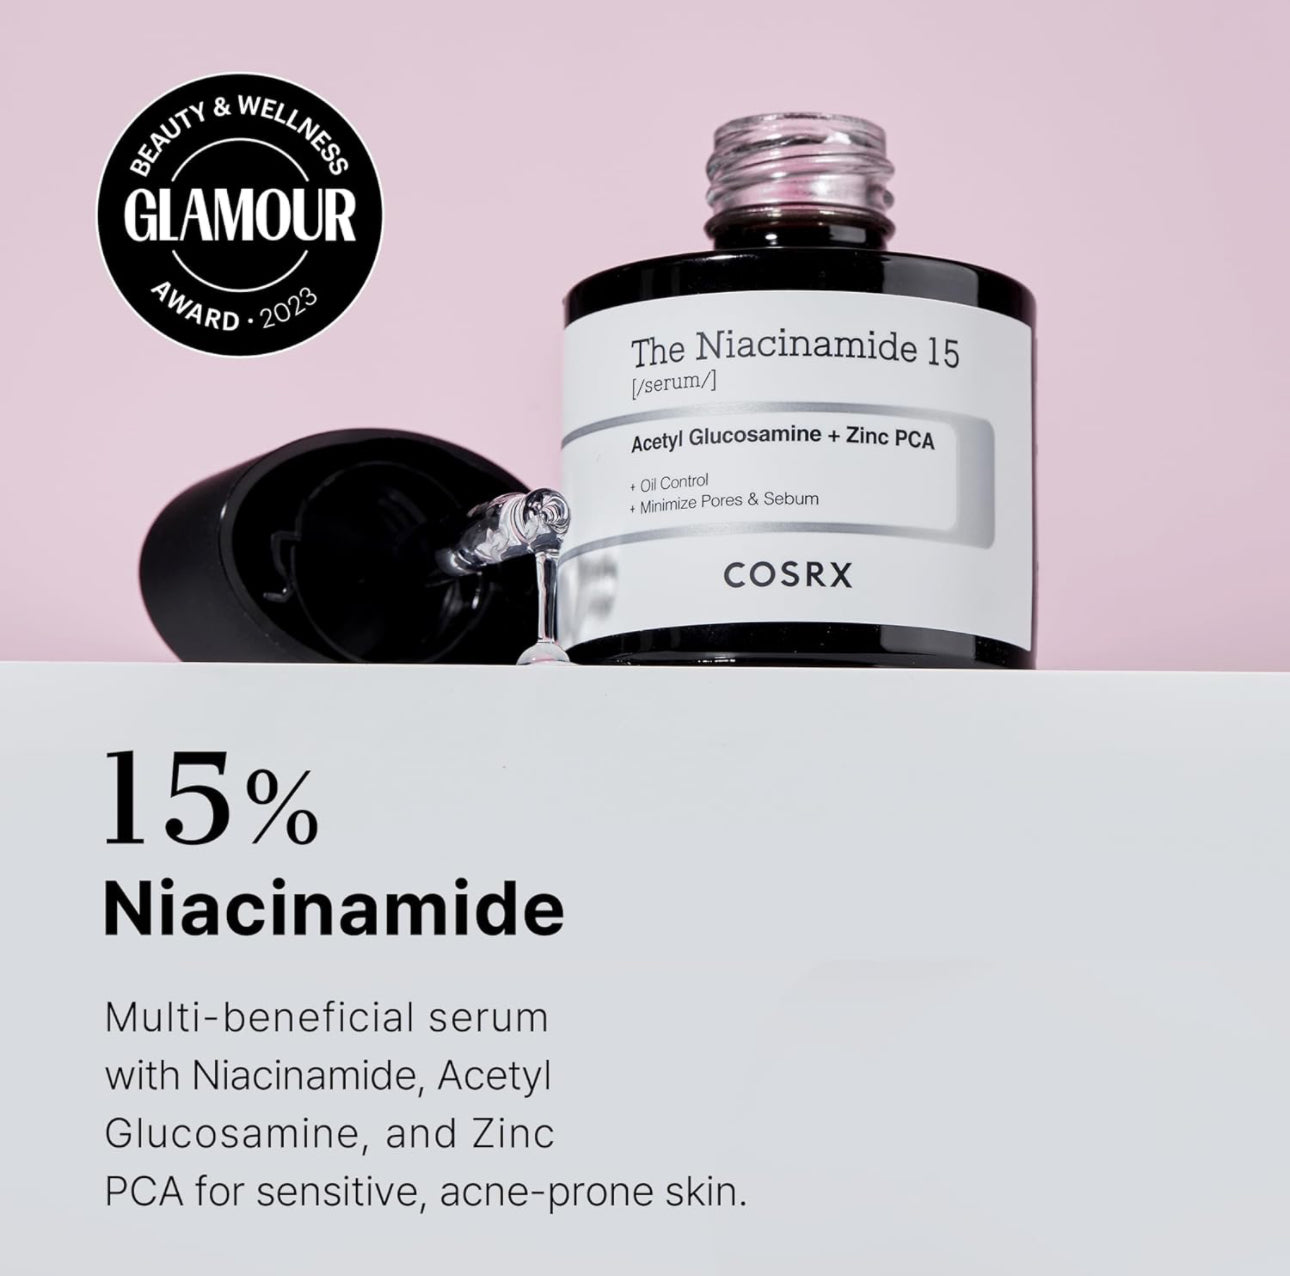 COSRX NIACINAMIDE 15% FACE SERUM